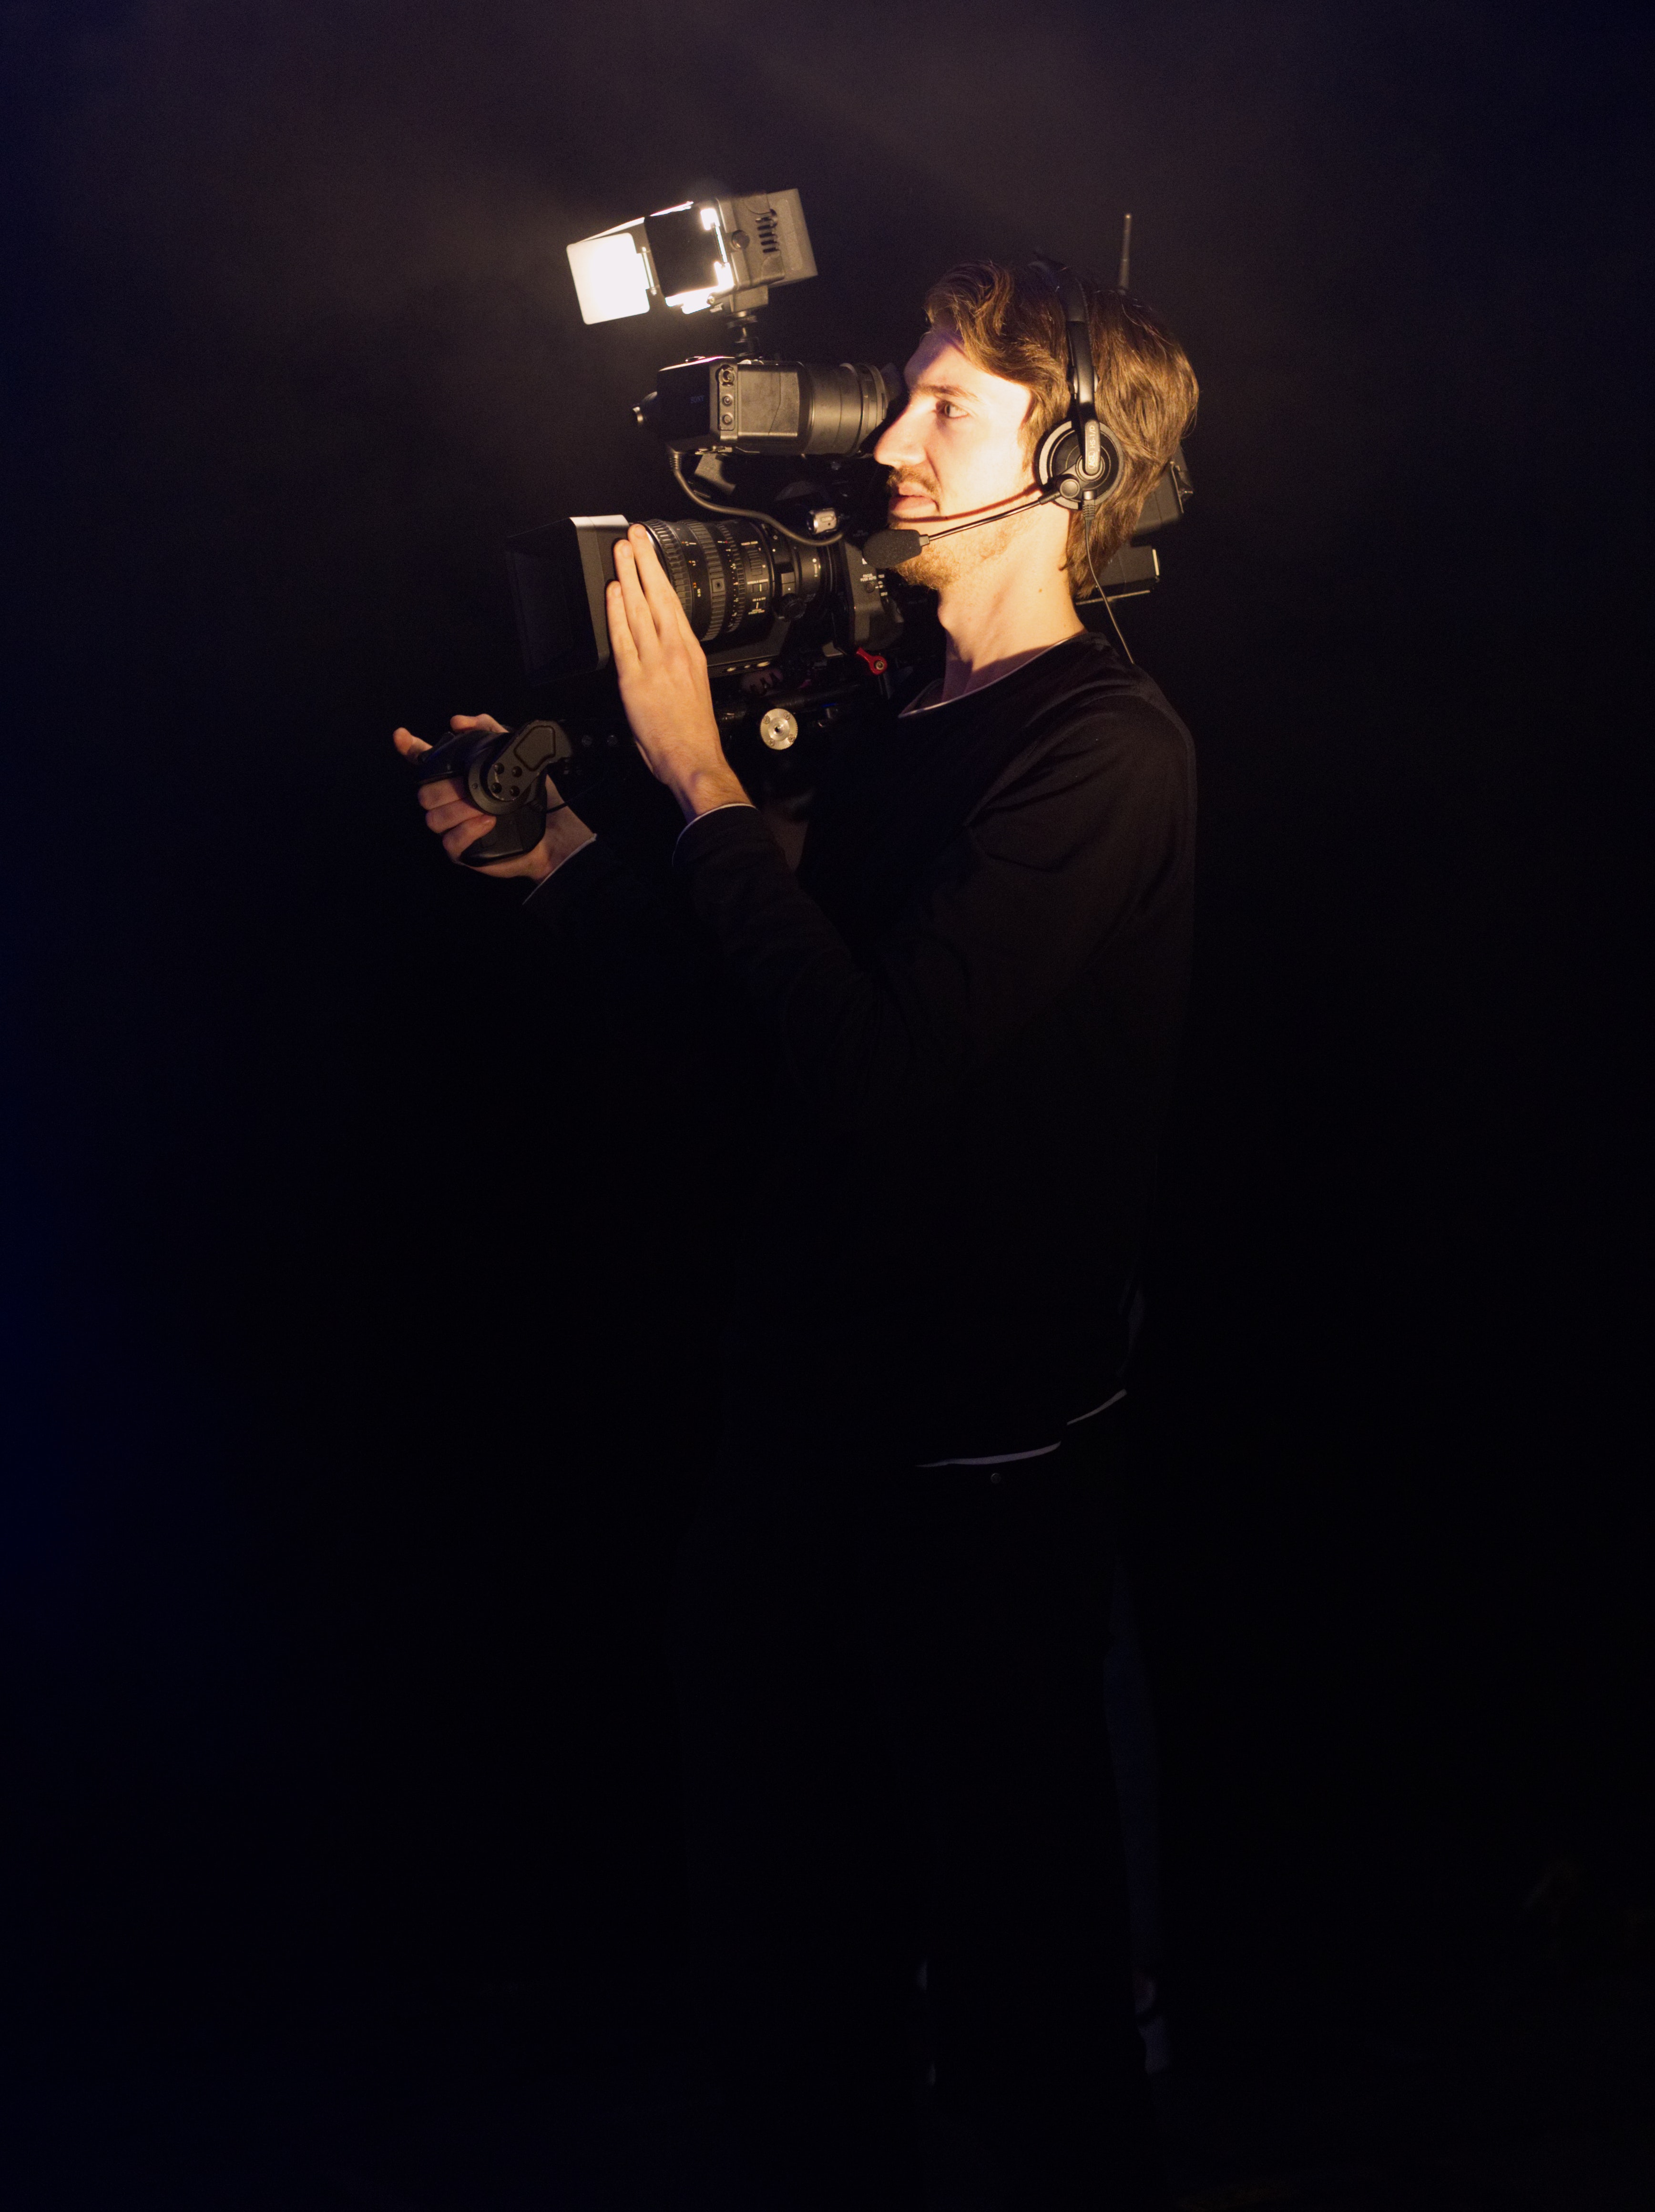 Man wearing black long-sleeved shirt using video camera photo